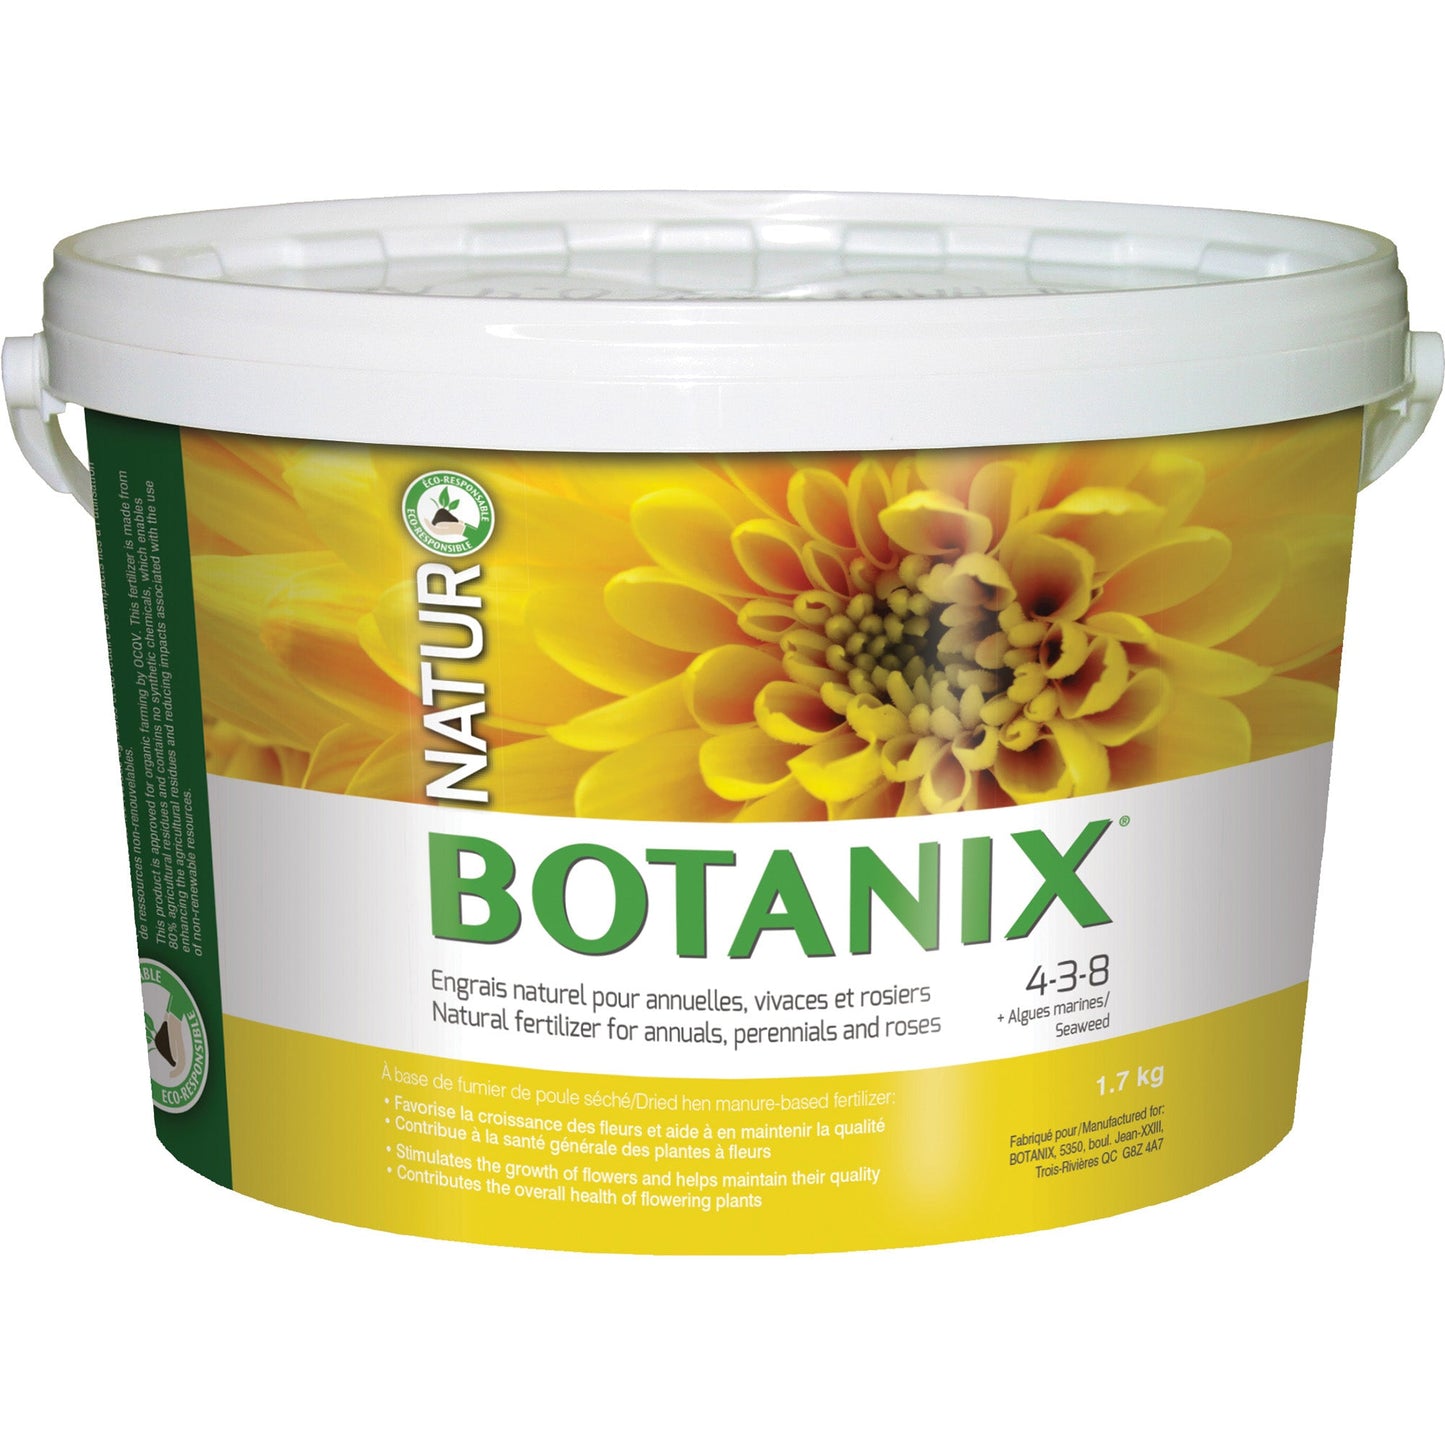 Botanix NATUR Natural fertilizer for annuals, perennials and roses 4-3-8